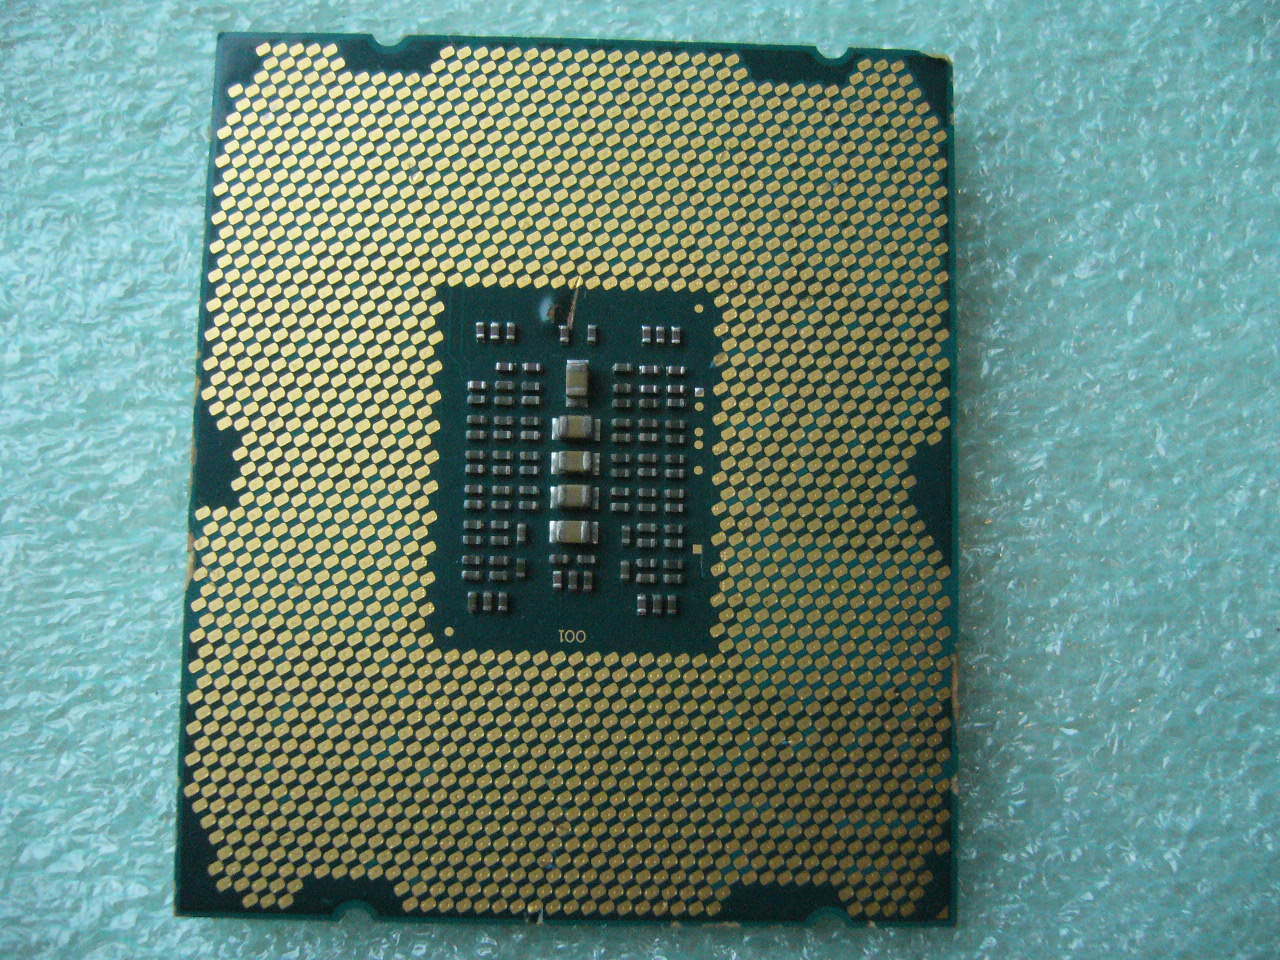 QTY 1x Intel CPU E5-2603 V2 ES CPU Quad-Cores 1.8Ghz 10MB LGA2011 QD71 - zum Schließen ins Bild klicken